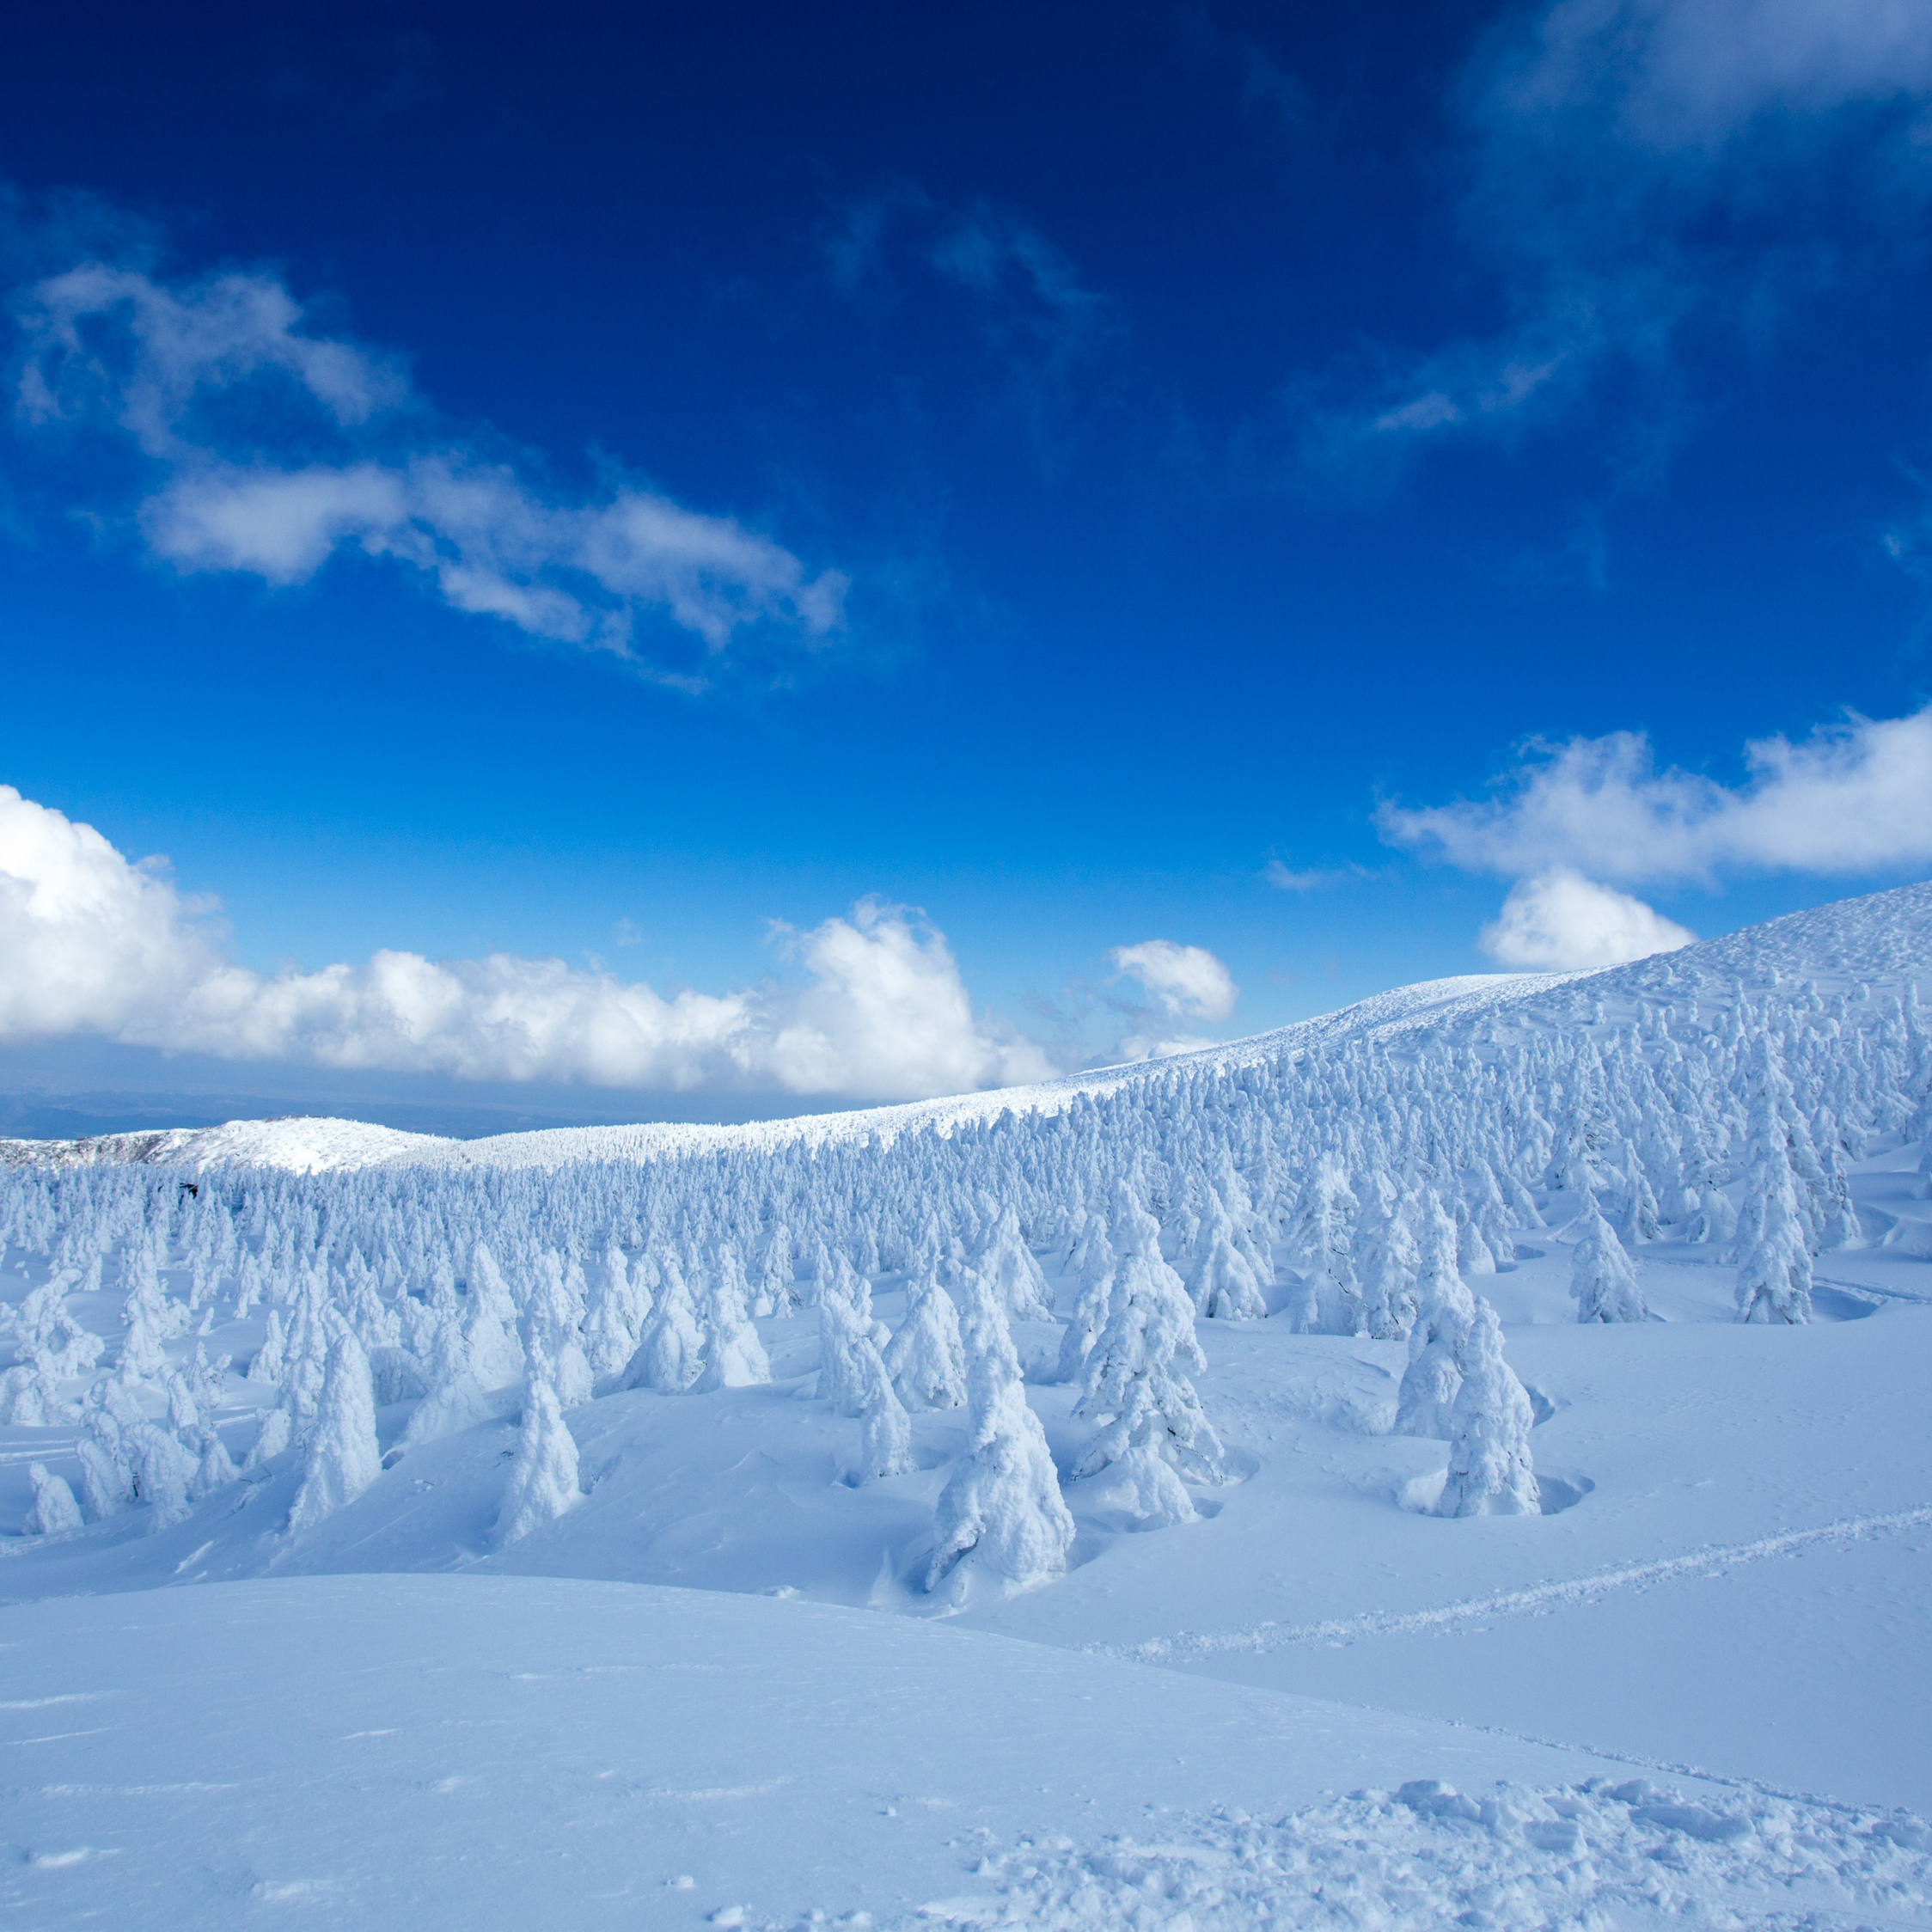 Download 2248x2248 Wallpaper Winter Snow Caped Trees Landscape Nature Ipad Air Ipad Air 2 Ipad 3 Ipad 4 Ipad Mini 2 Ipad Mini 3 2248x2248 Hd Image Background